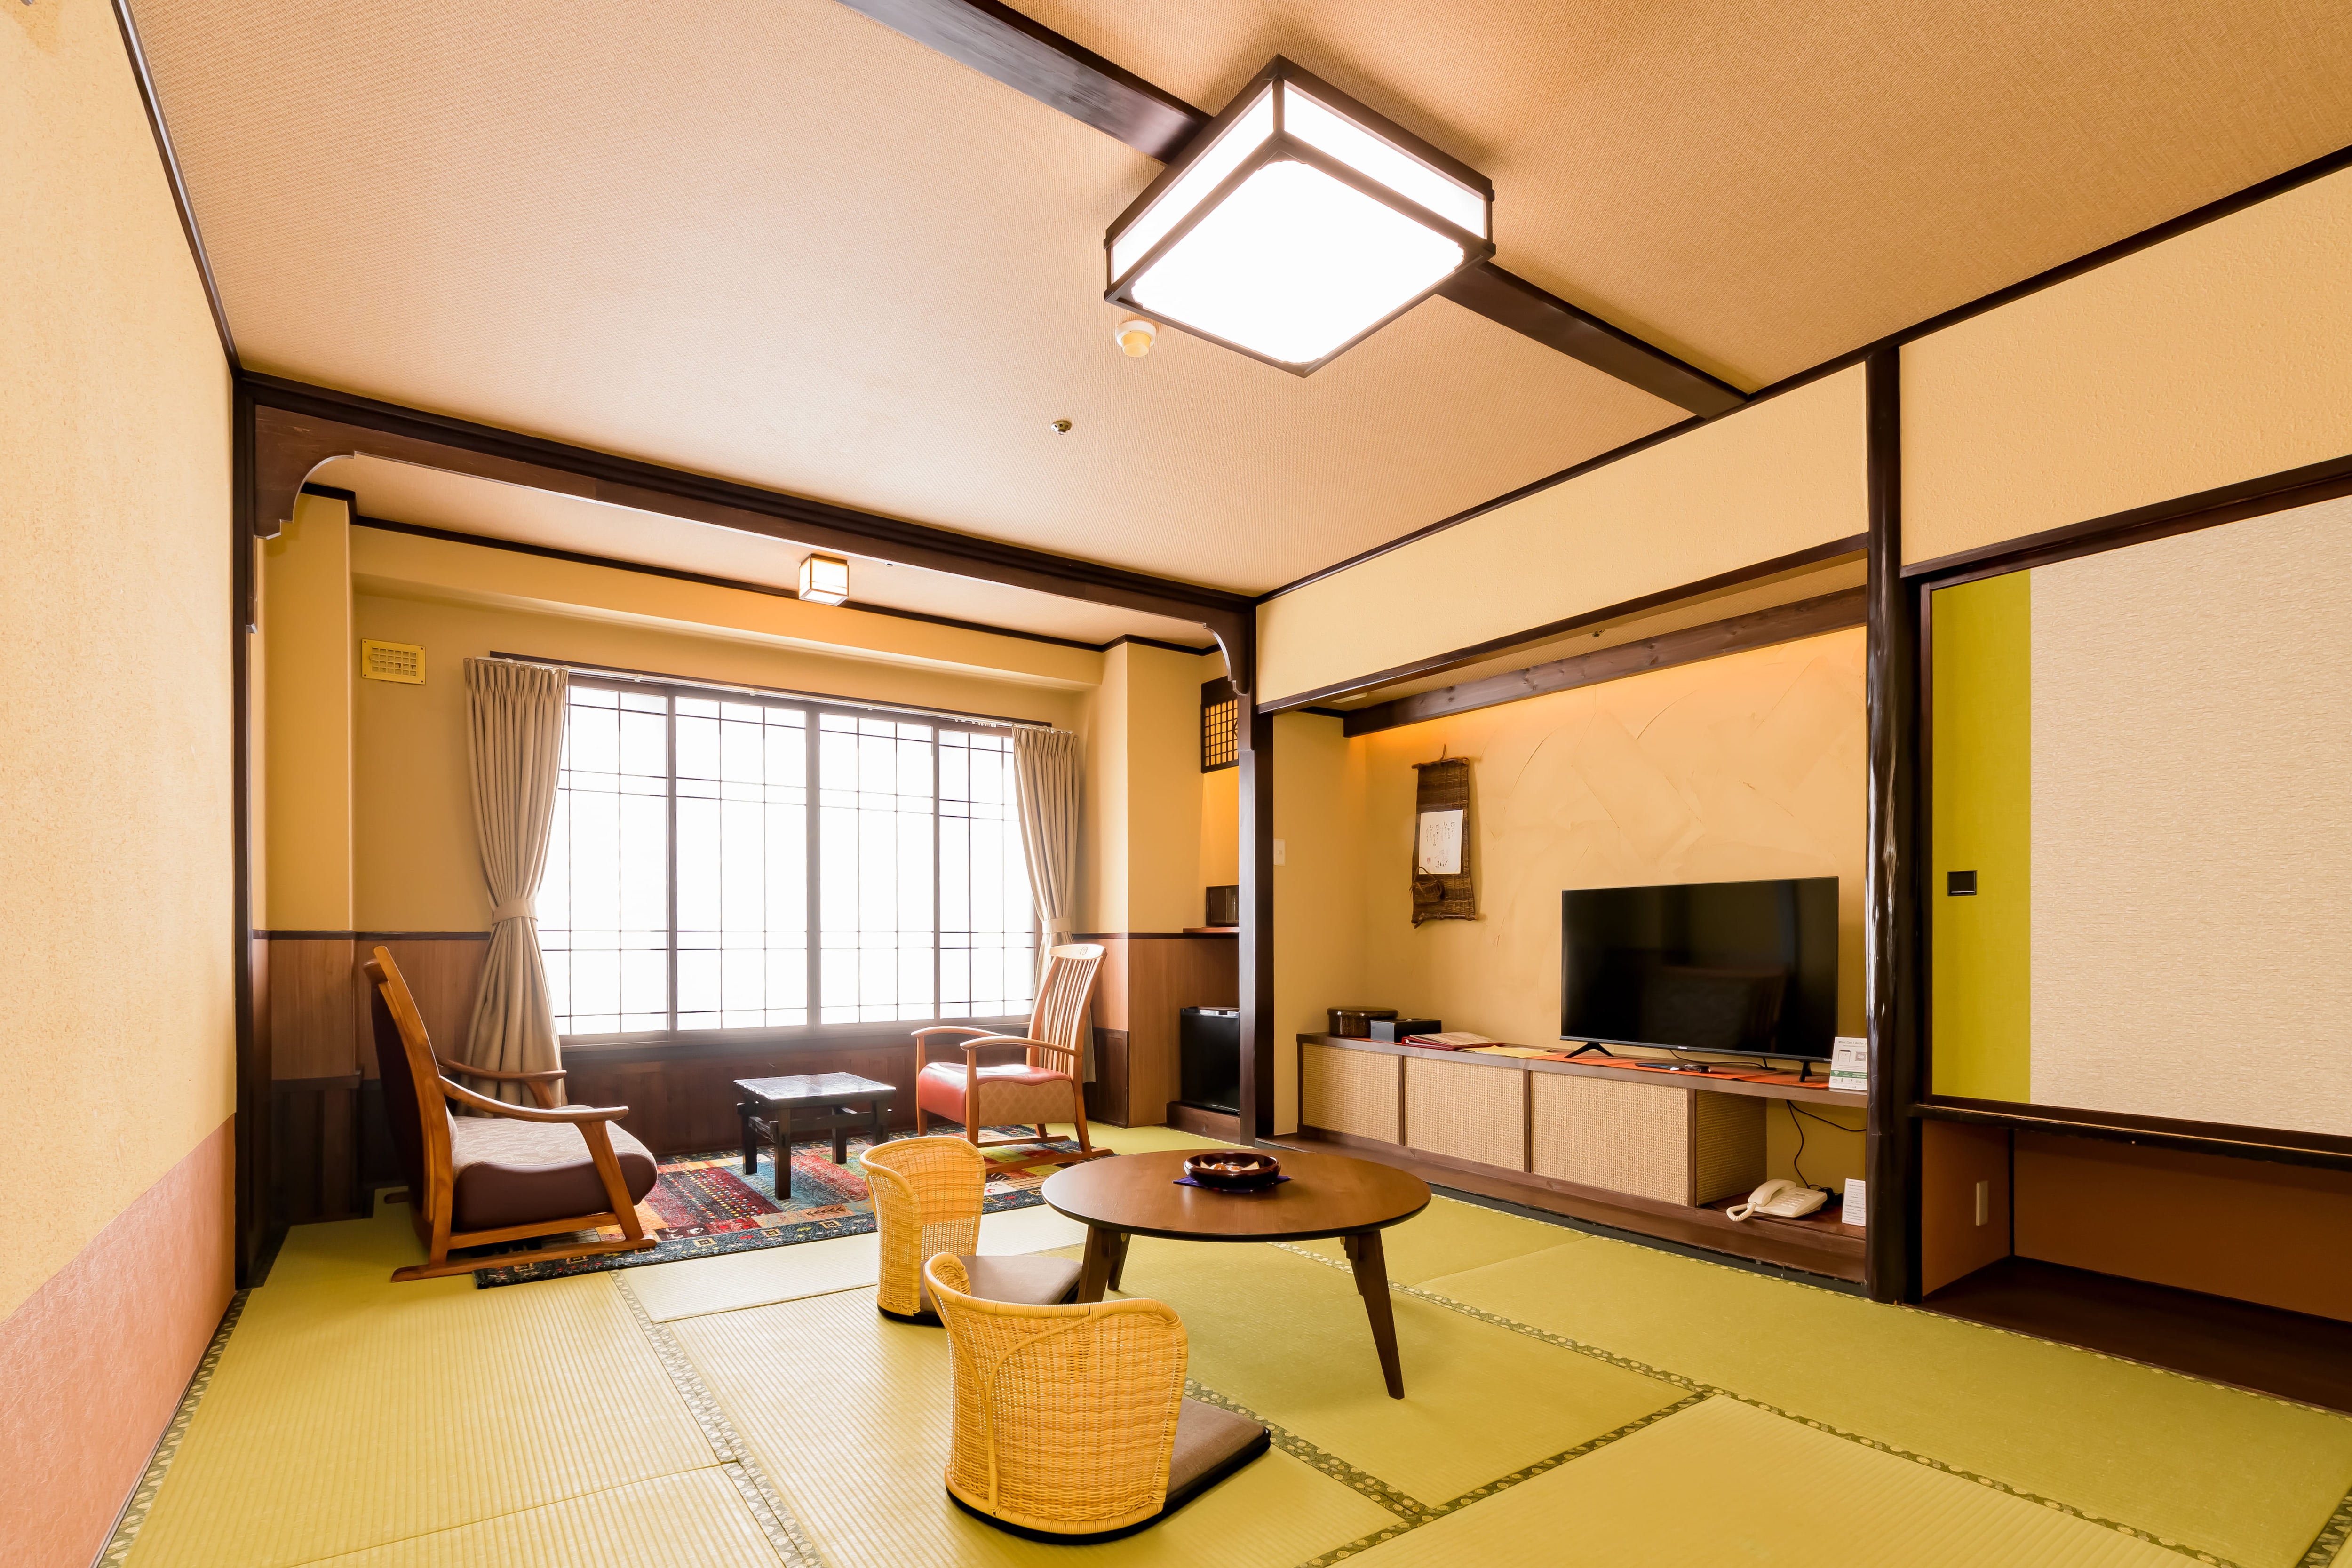 Nukumorikan Japanese-style room 12 tatami mats